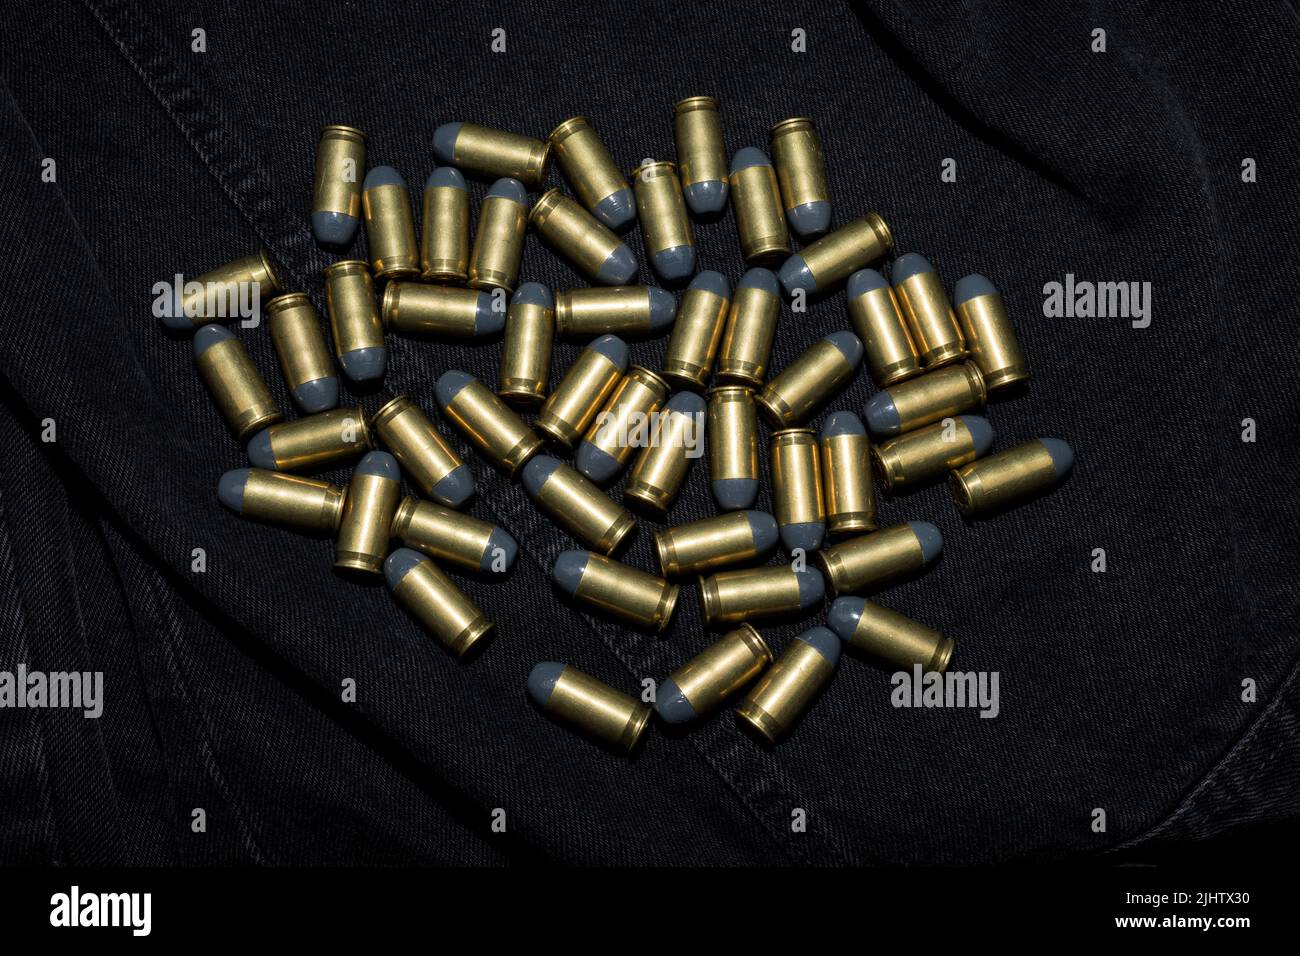 Many .45 ACP cartridges on a black fabric background Stock Photo